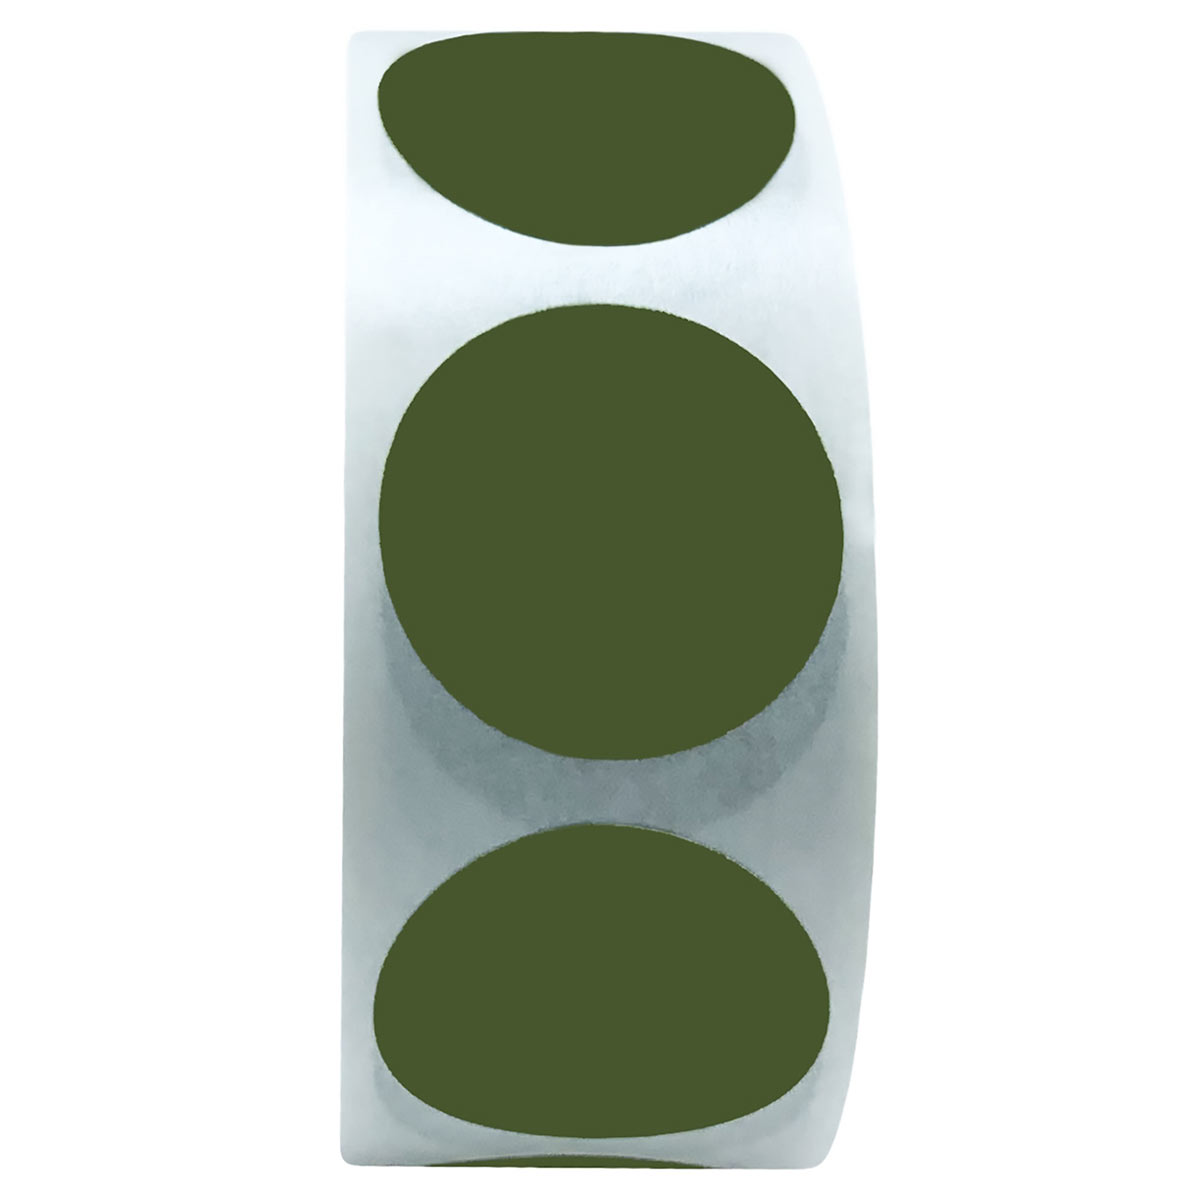 olive-green-color-code-labels-3-4-round-instocklabels